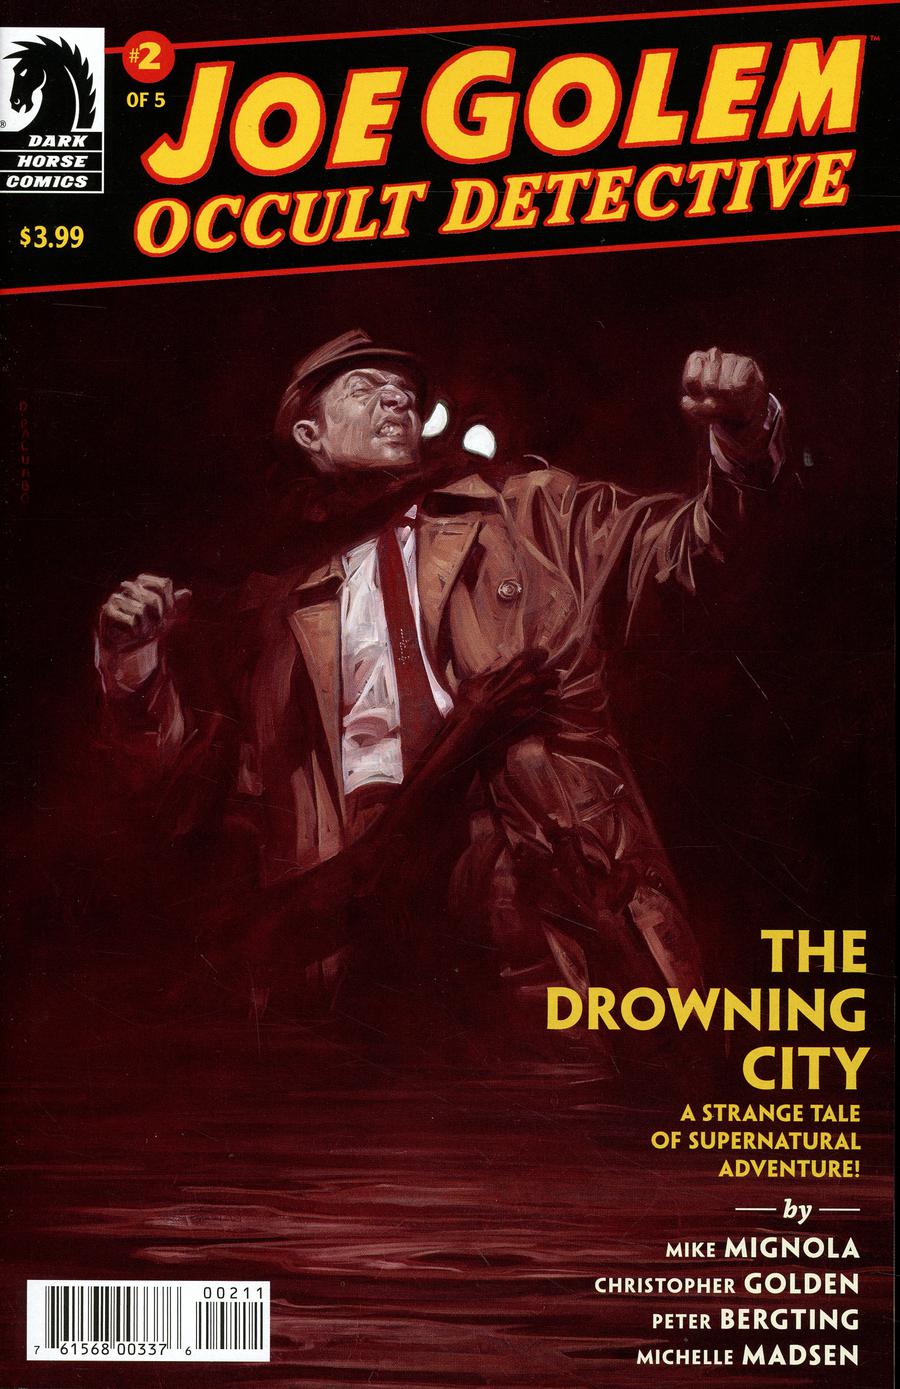 Joe Golem Occult Detective Drowning City #2